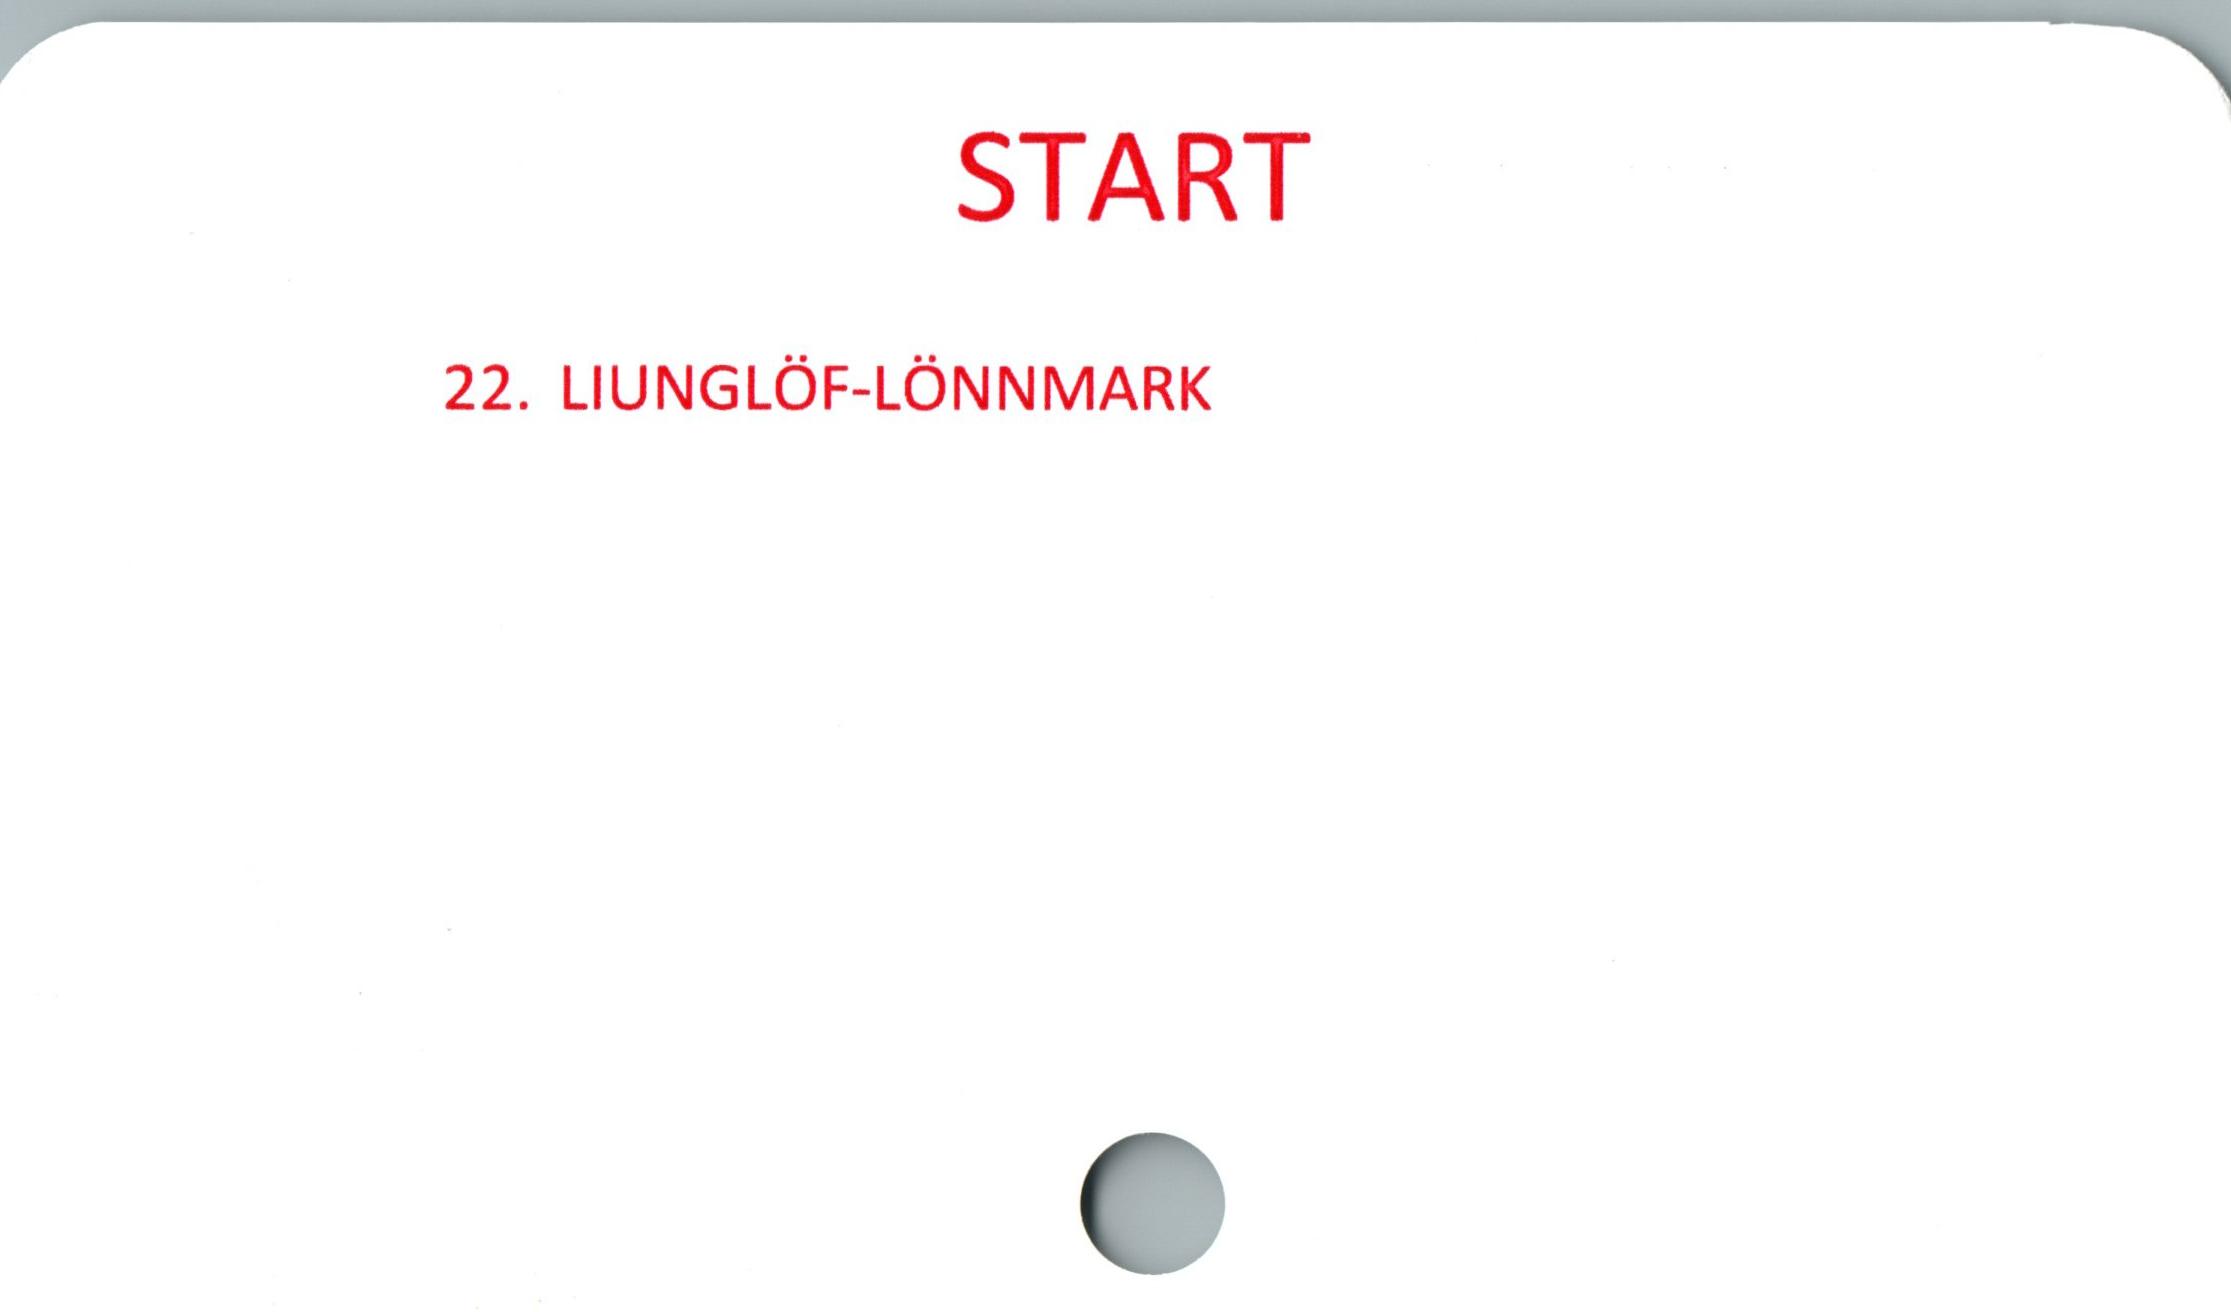  ﻿START

22. LIUNGLÖF-LÖNNMARK